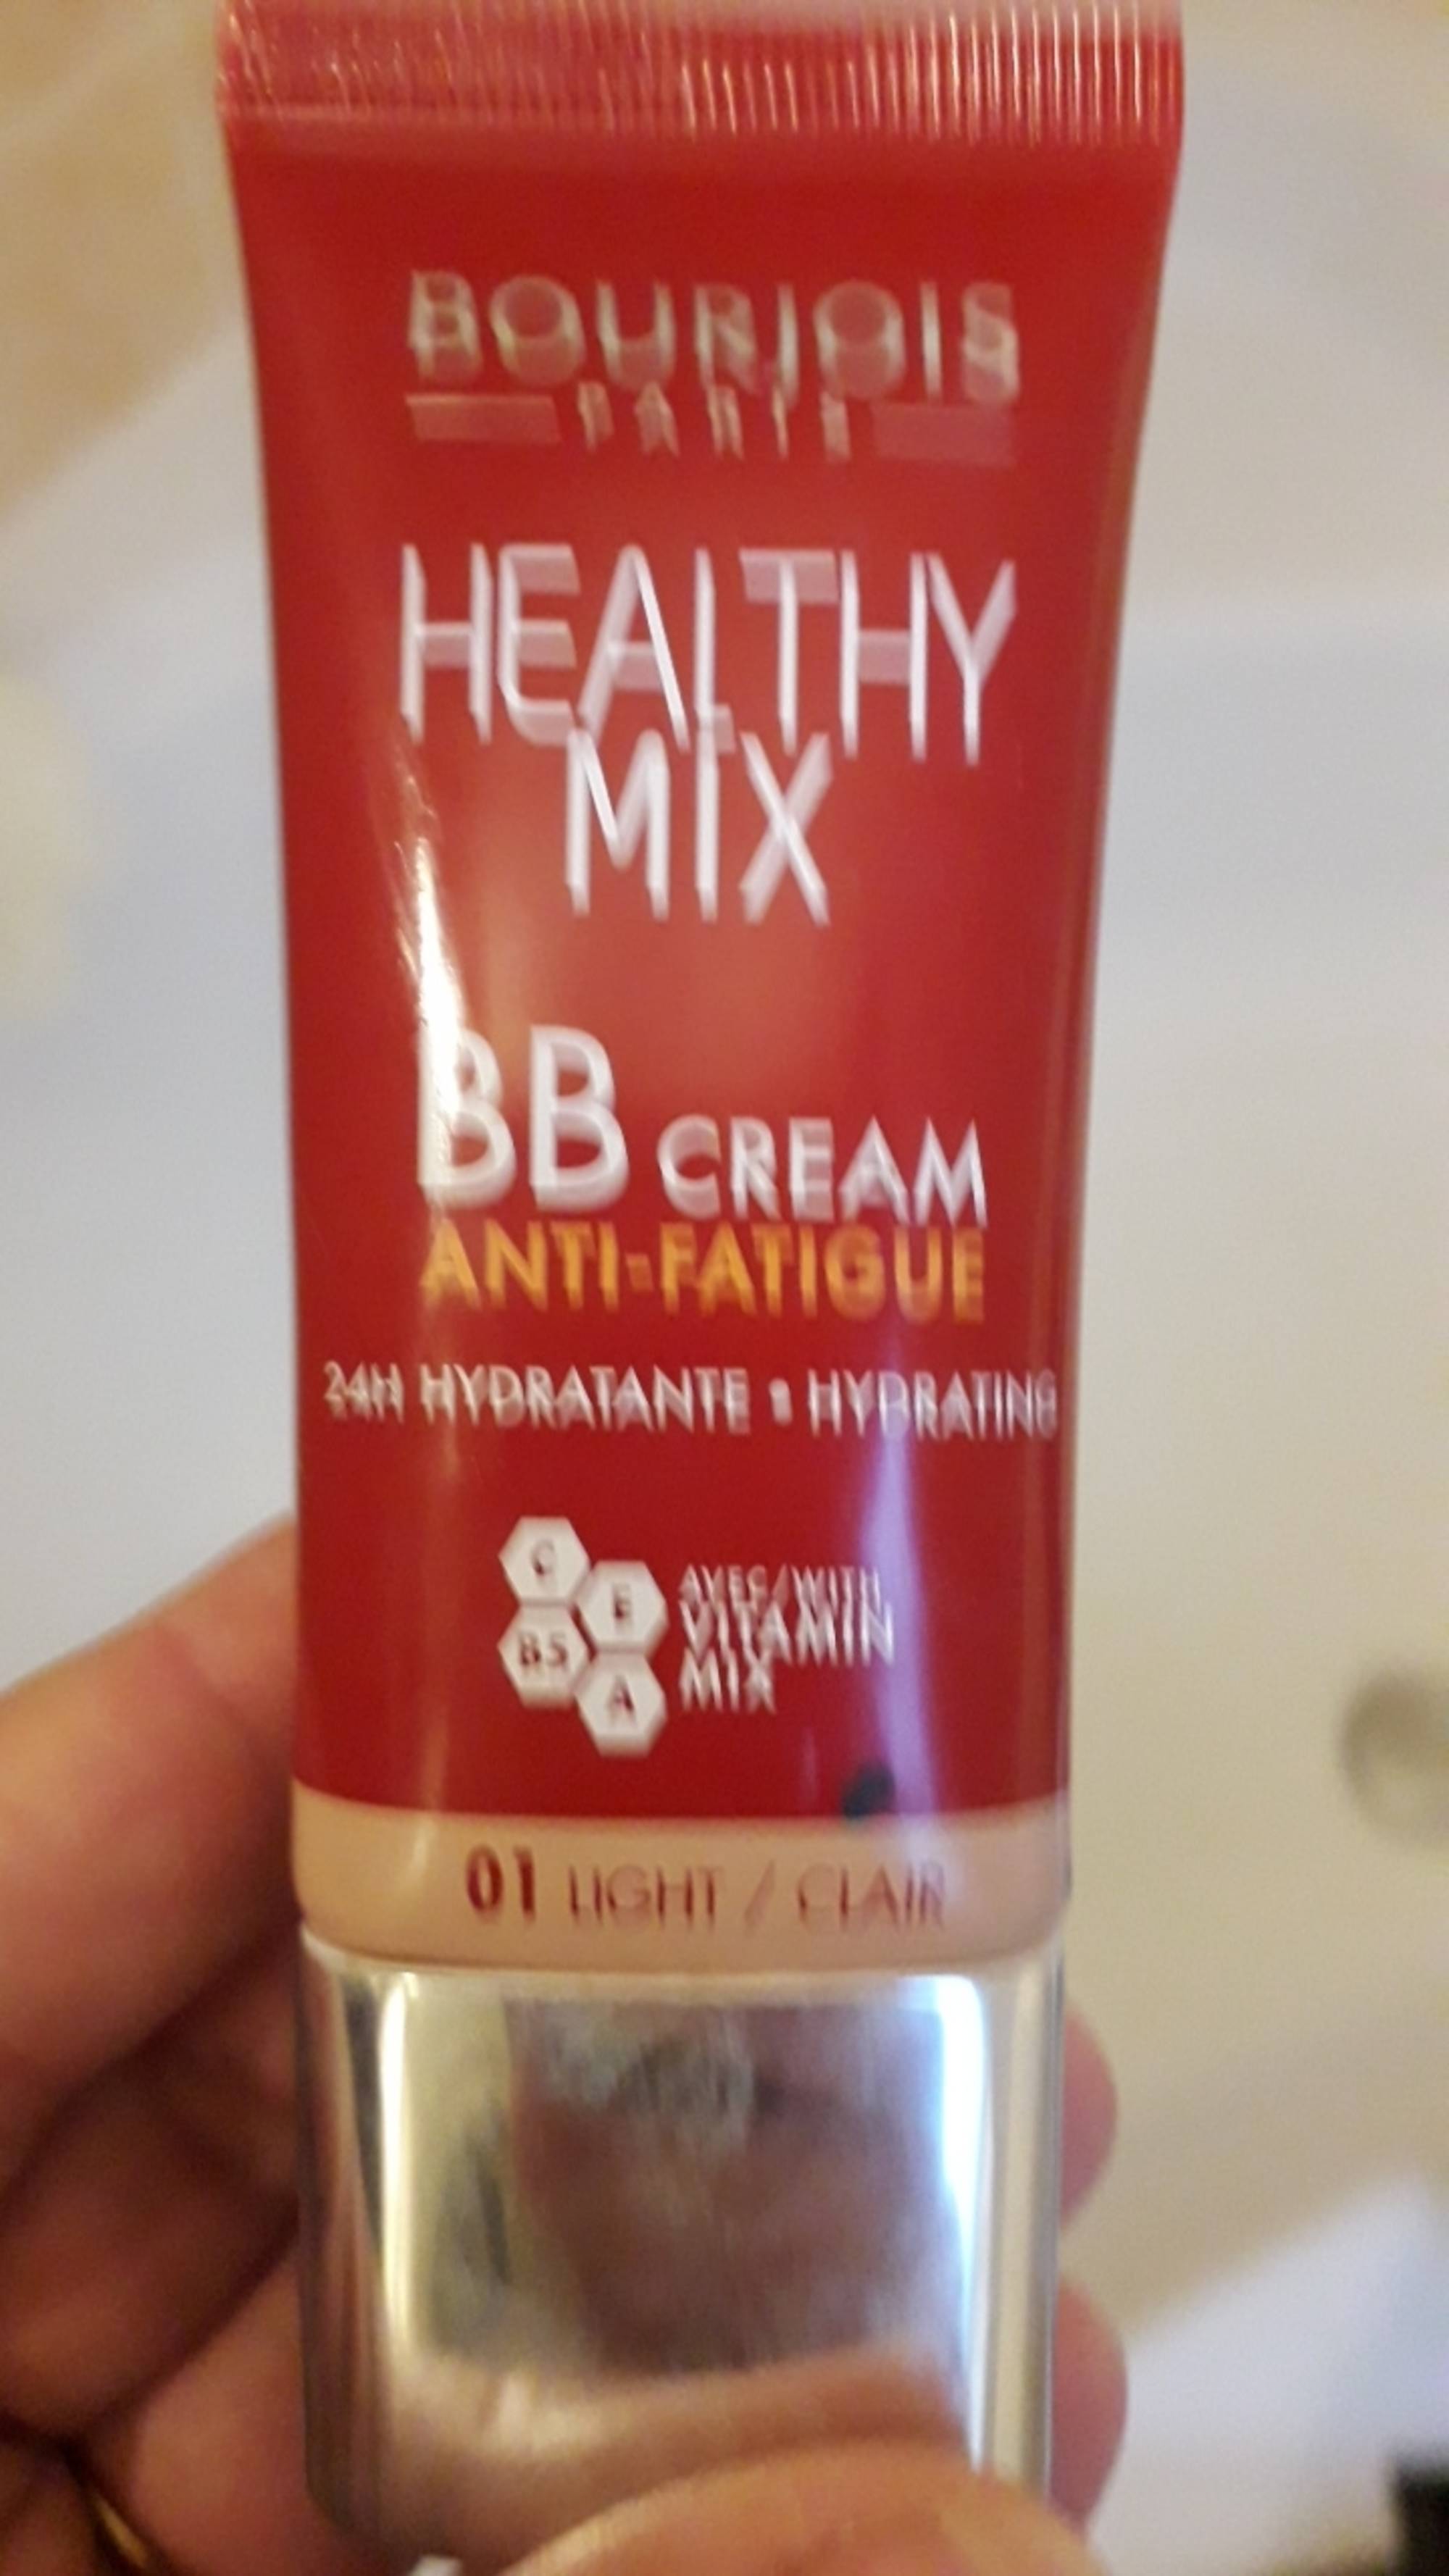 BOURJOIS - Healthy mix - BB cream anti-fatigue